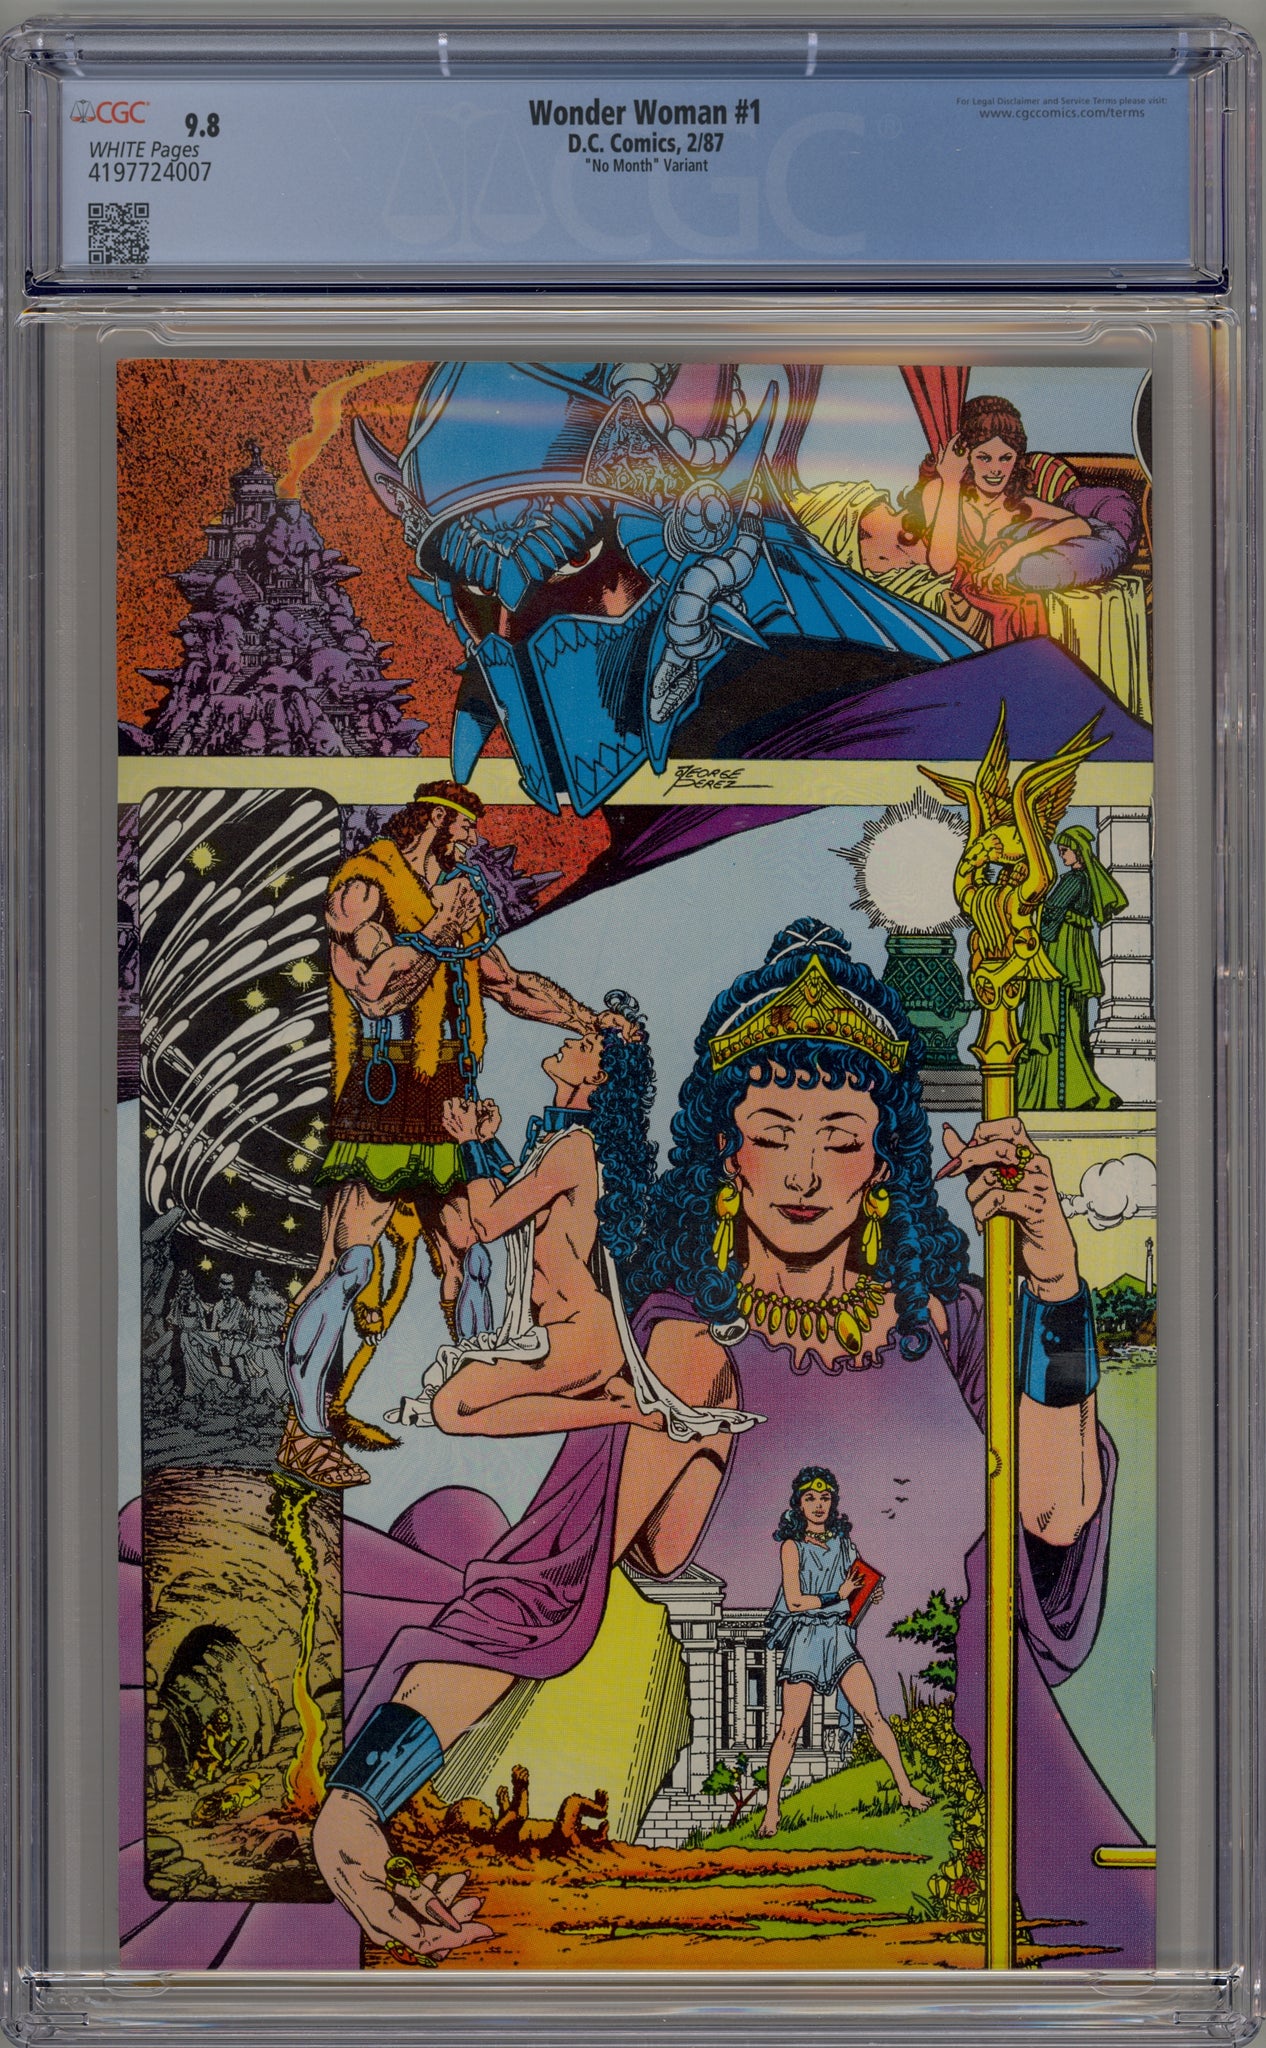 Wonder Woman #1 (1987) no month variant